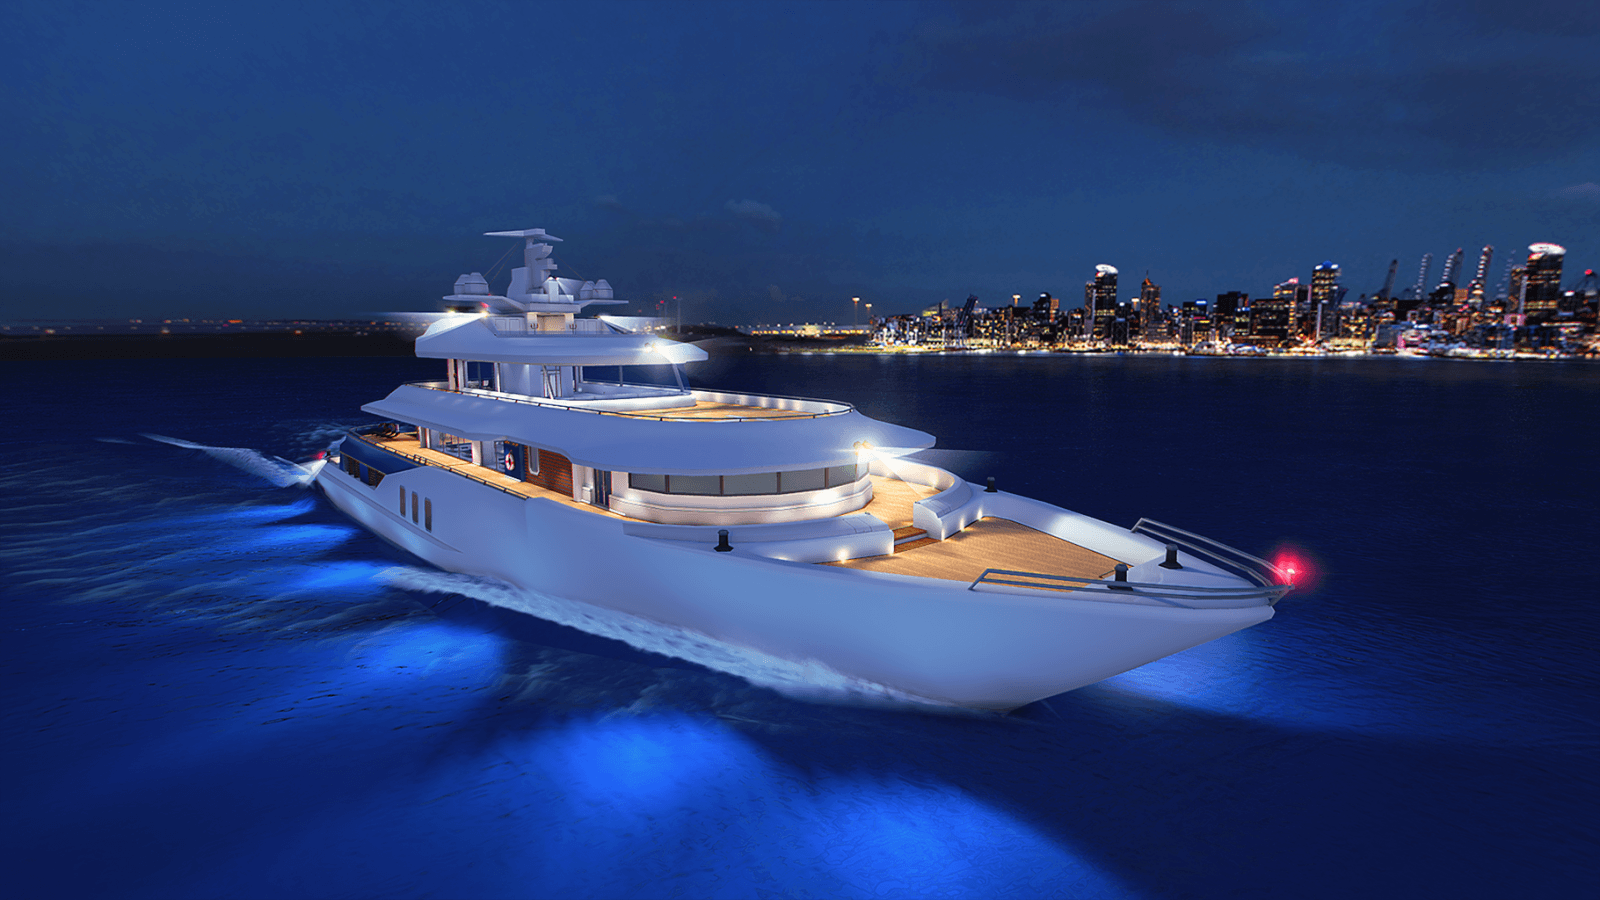 super luxury yachts night